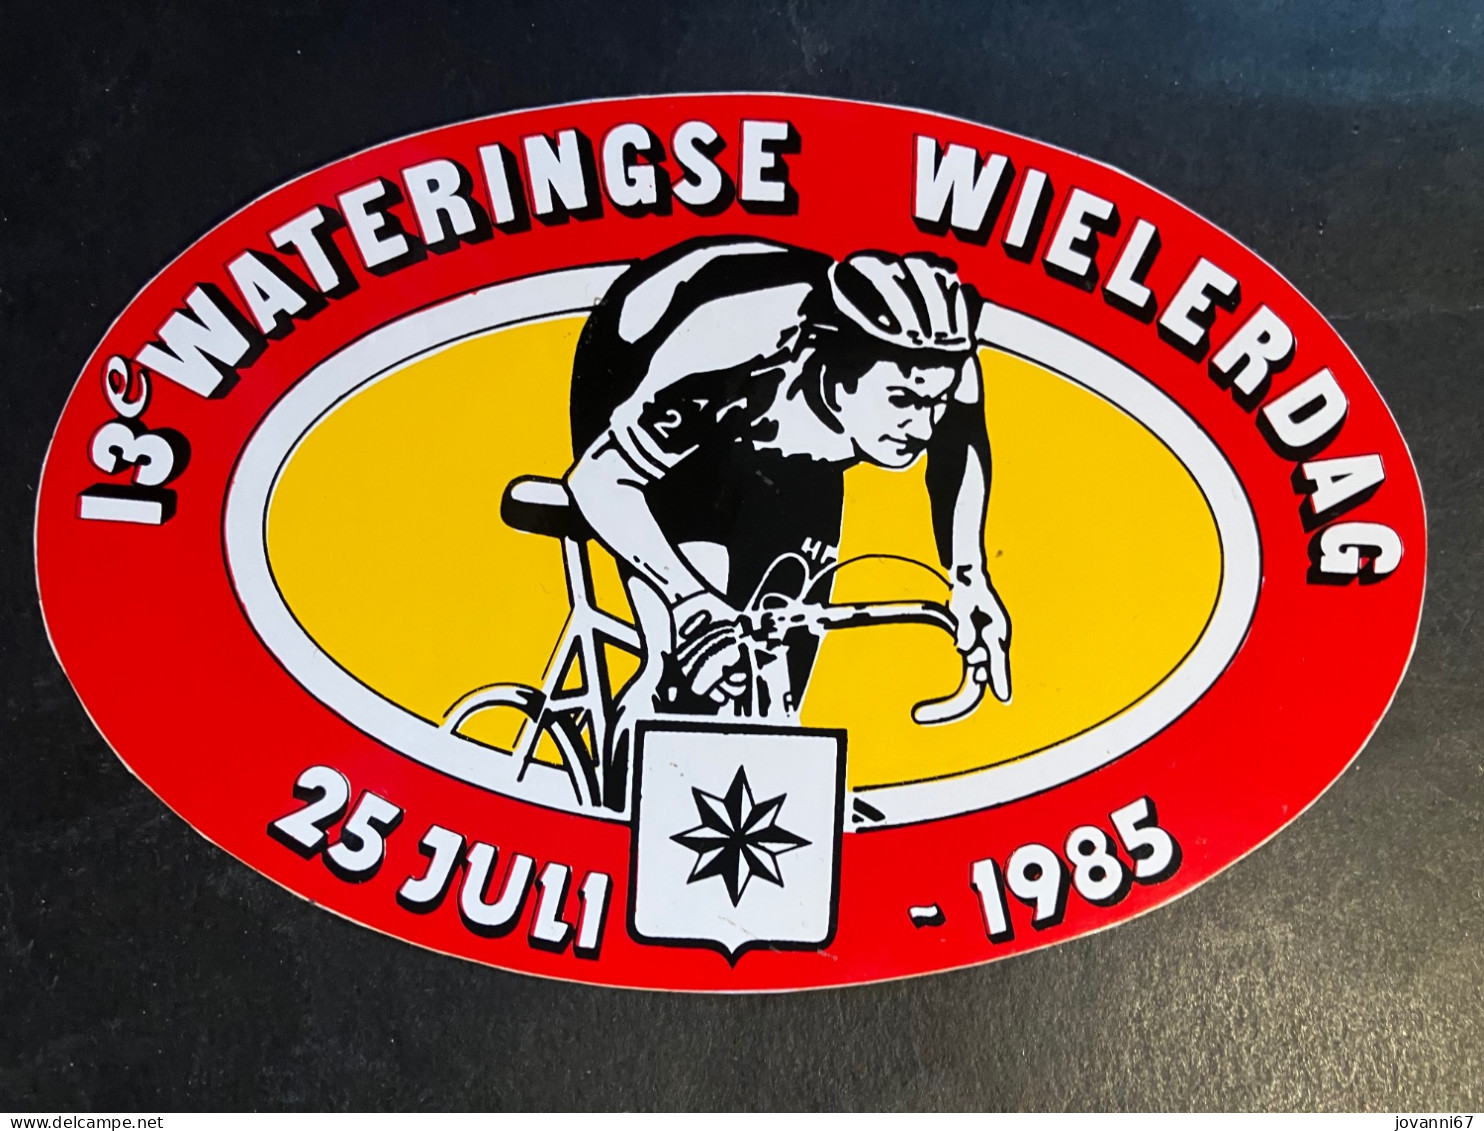 Wateringen - Sticker - Cyclisme - Ciclismo -wielrennen - Cyclisme